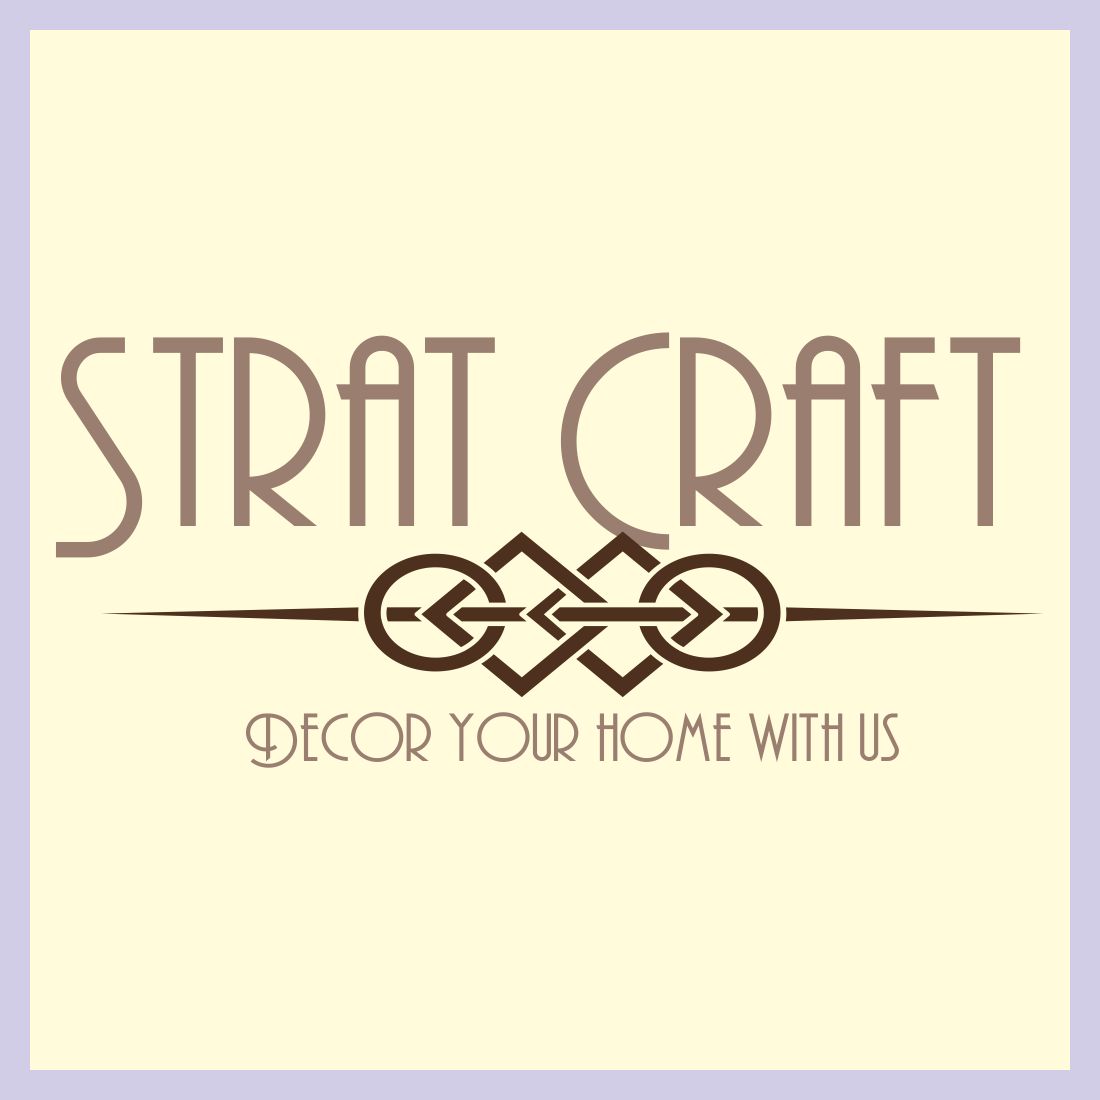 strat craft logo 625